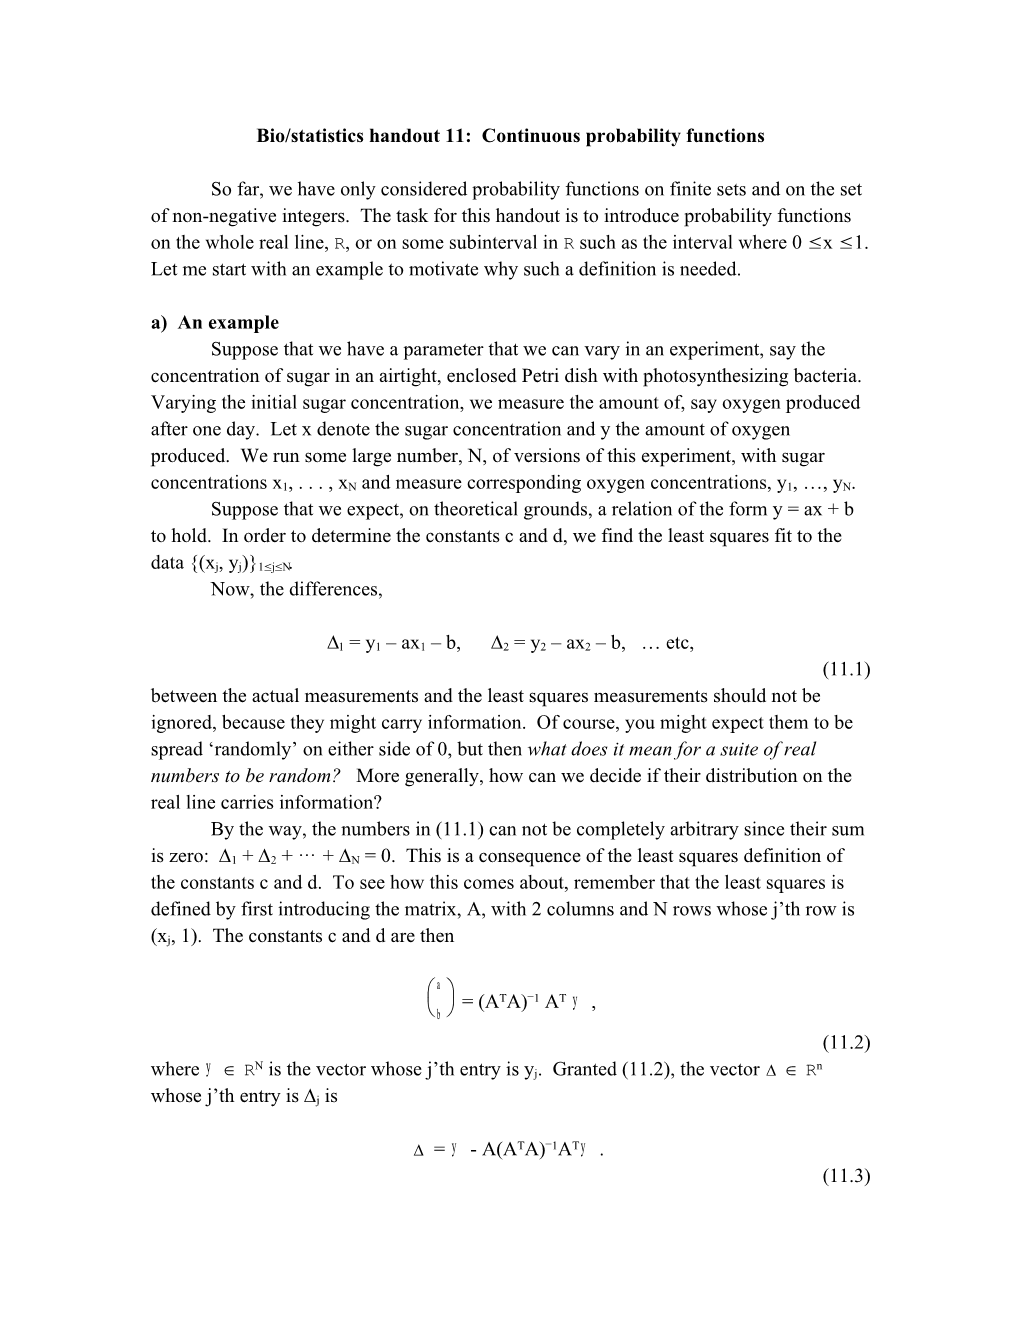 Bio/Statistics Handout 11: Binomial and Poisson Applications